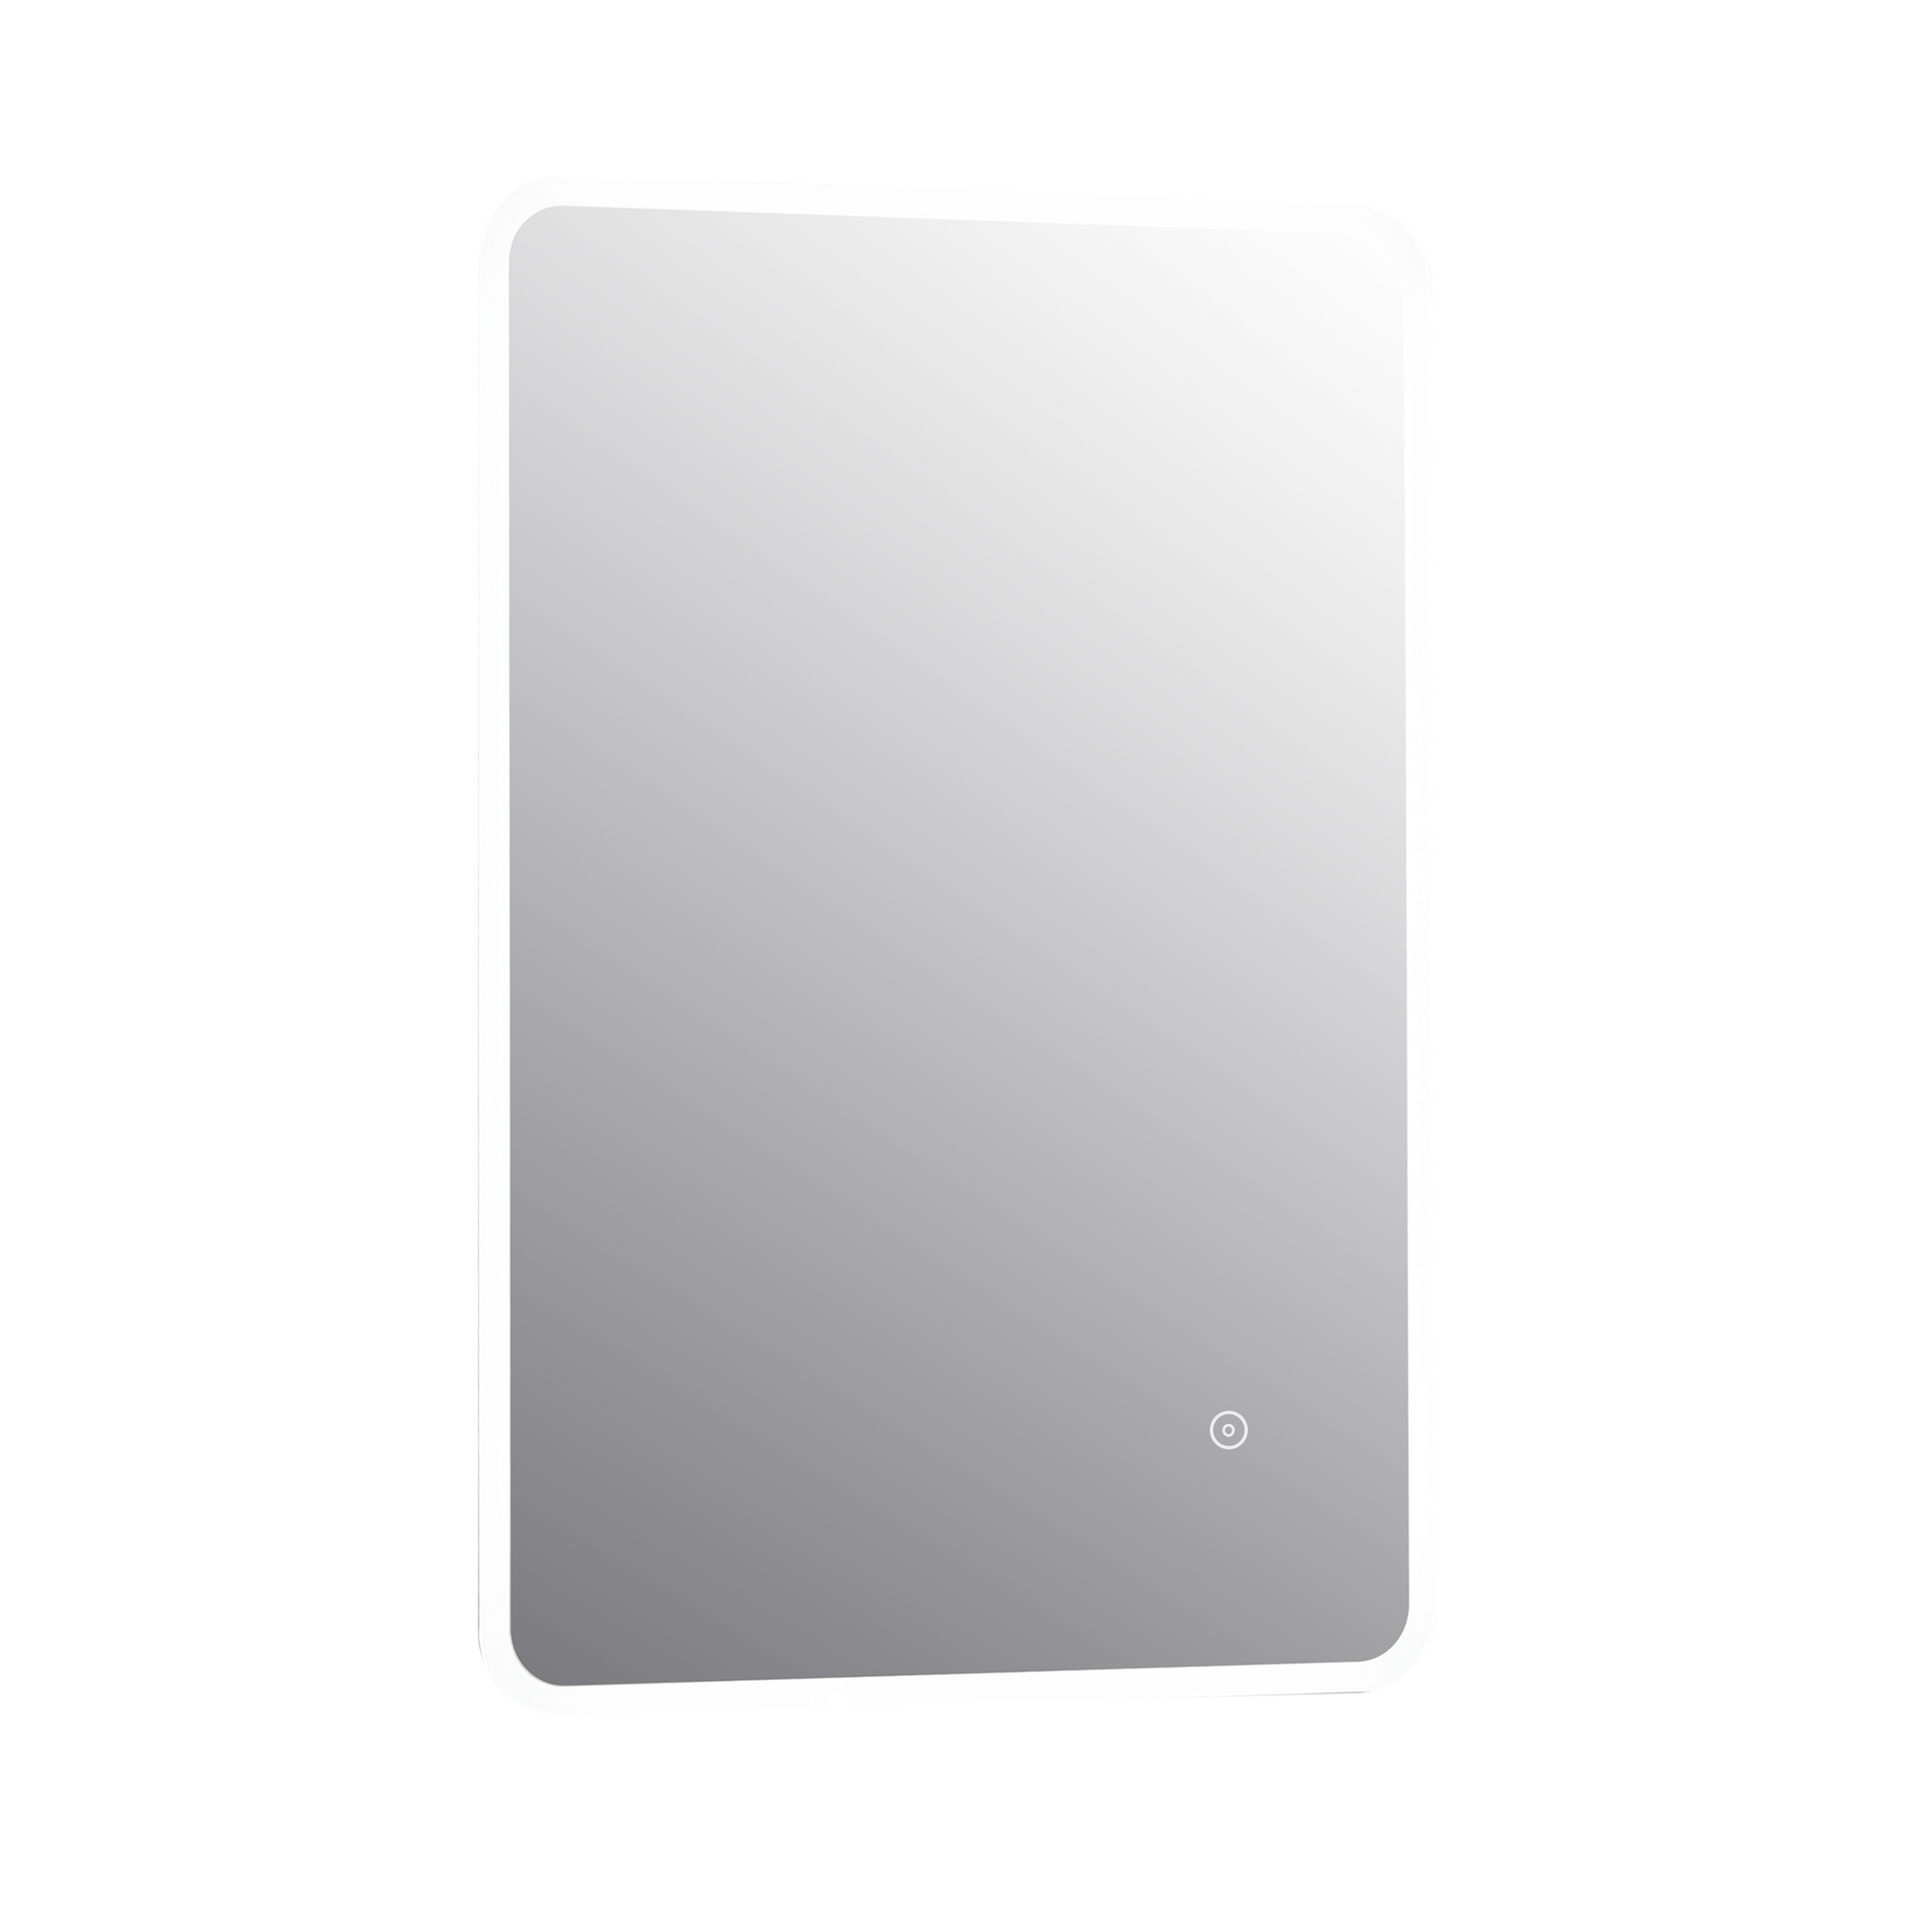 LED-Spiegel 'Noelia' 45 x 73 cm, mit Touchsensor + product picture